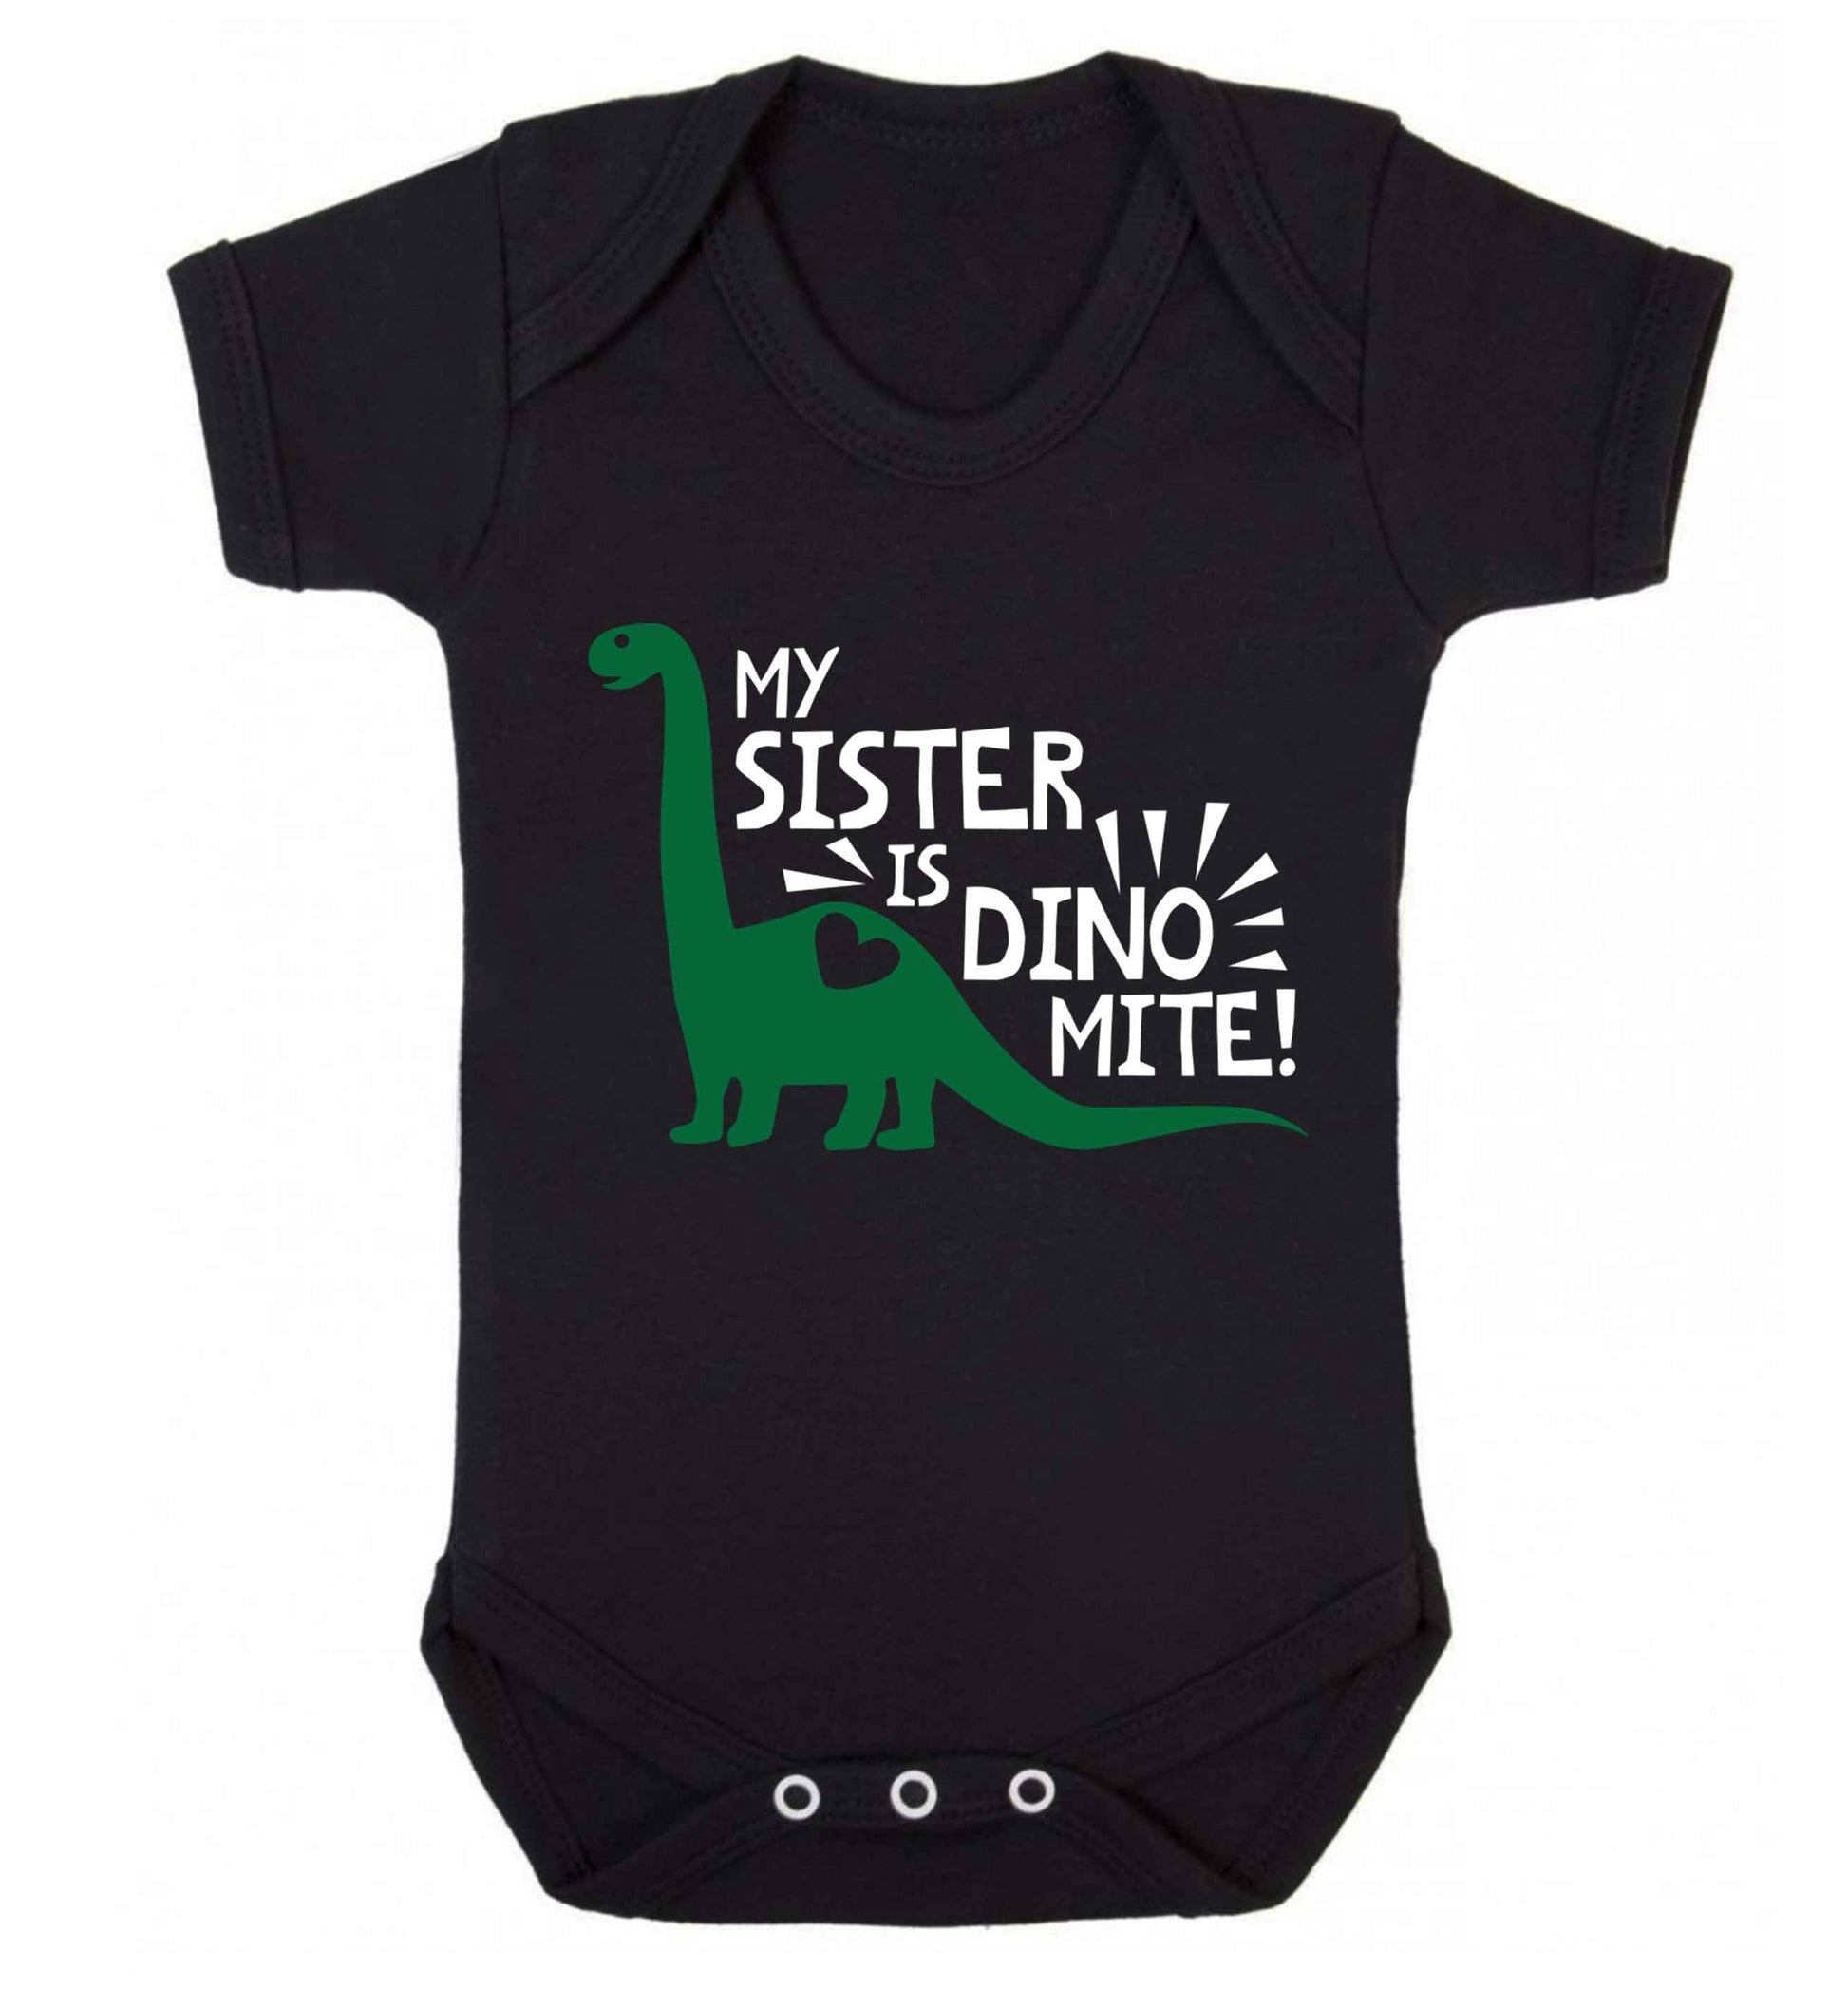 My sister is dinomite! Baby Vest black 18-24 months